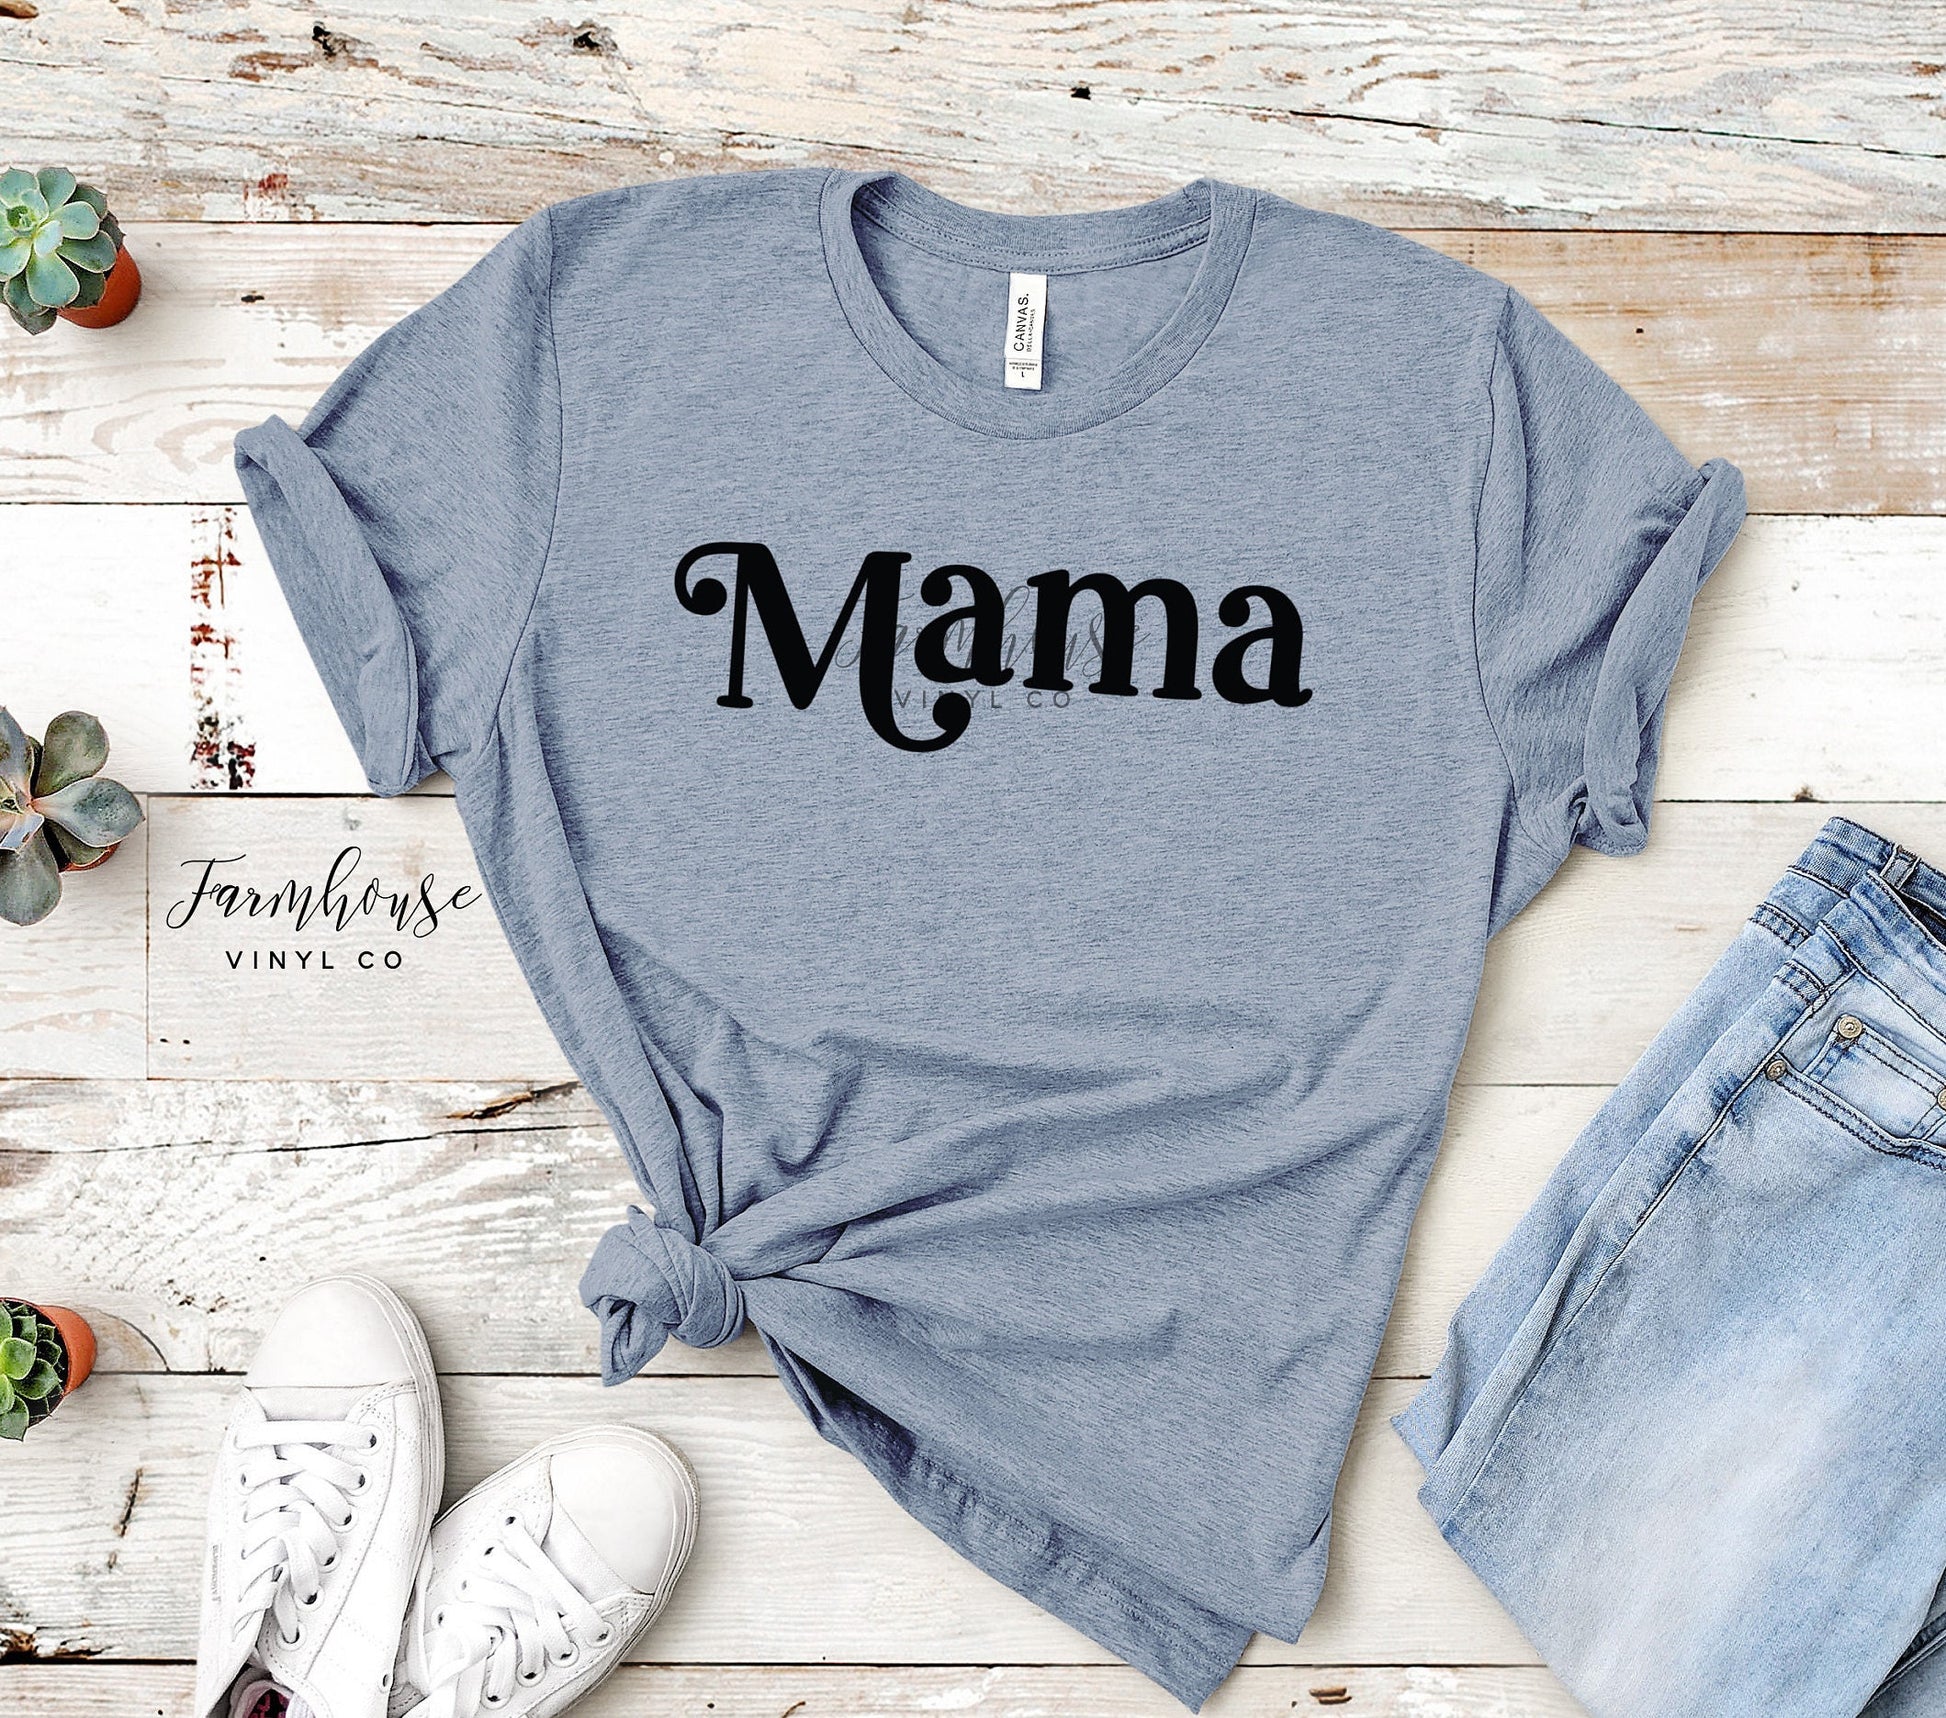 Mommy Group Dropout Tee Shirt~Mom Shirt Collection~Mom Tee Shirts~Mom Tee~Mom Shirts~SAHM~Mothers Day Gift~Homeschool Mom~Funny Mom Shirts - Farmhouse Vinyl Co